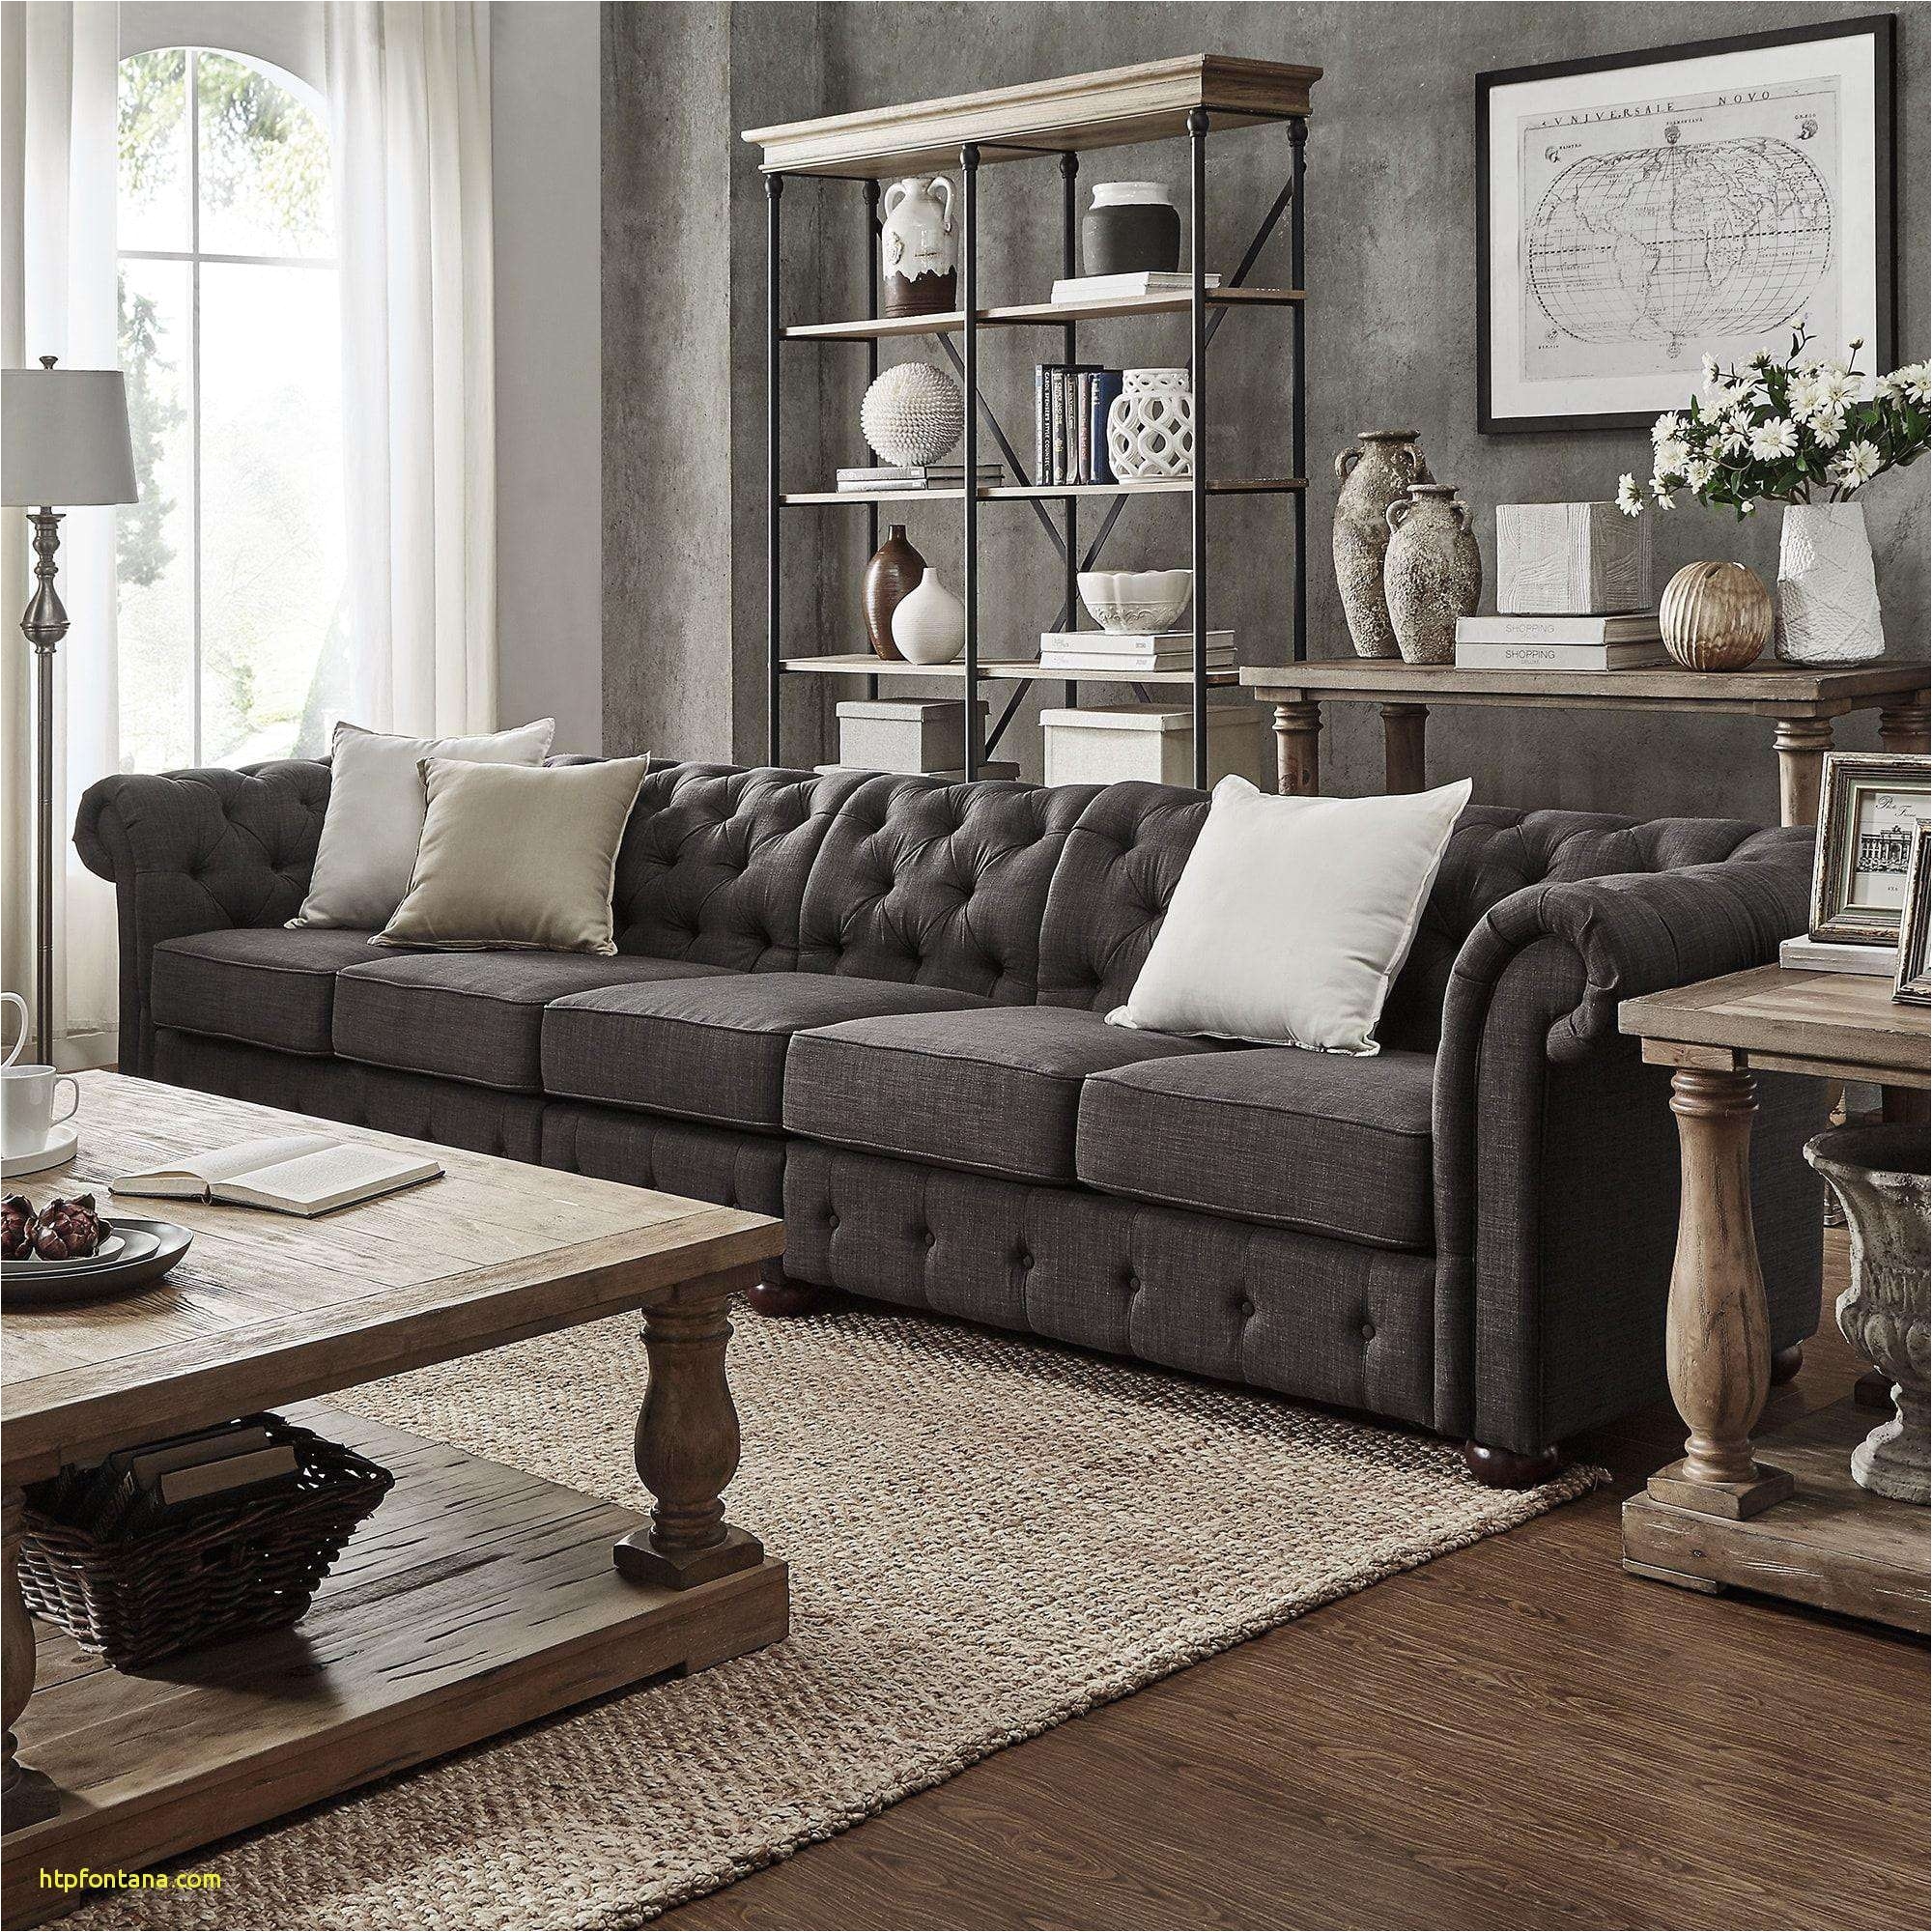 Black Living Room Table Living Room Decor with Black sofas Surprising Living Room Design